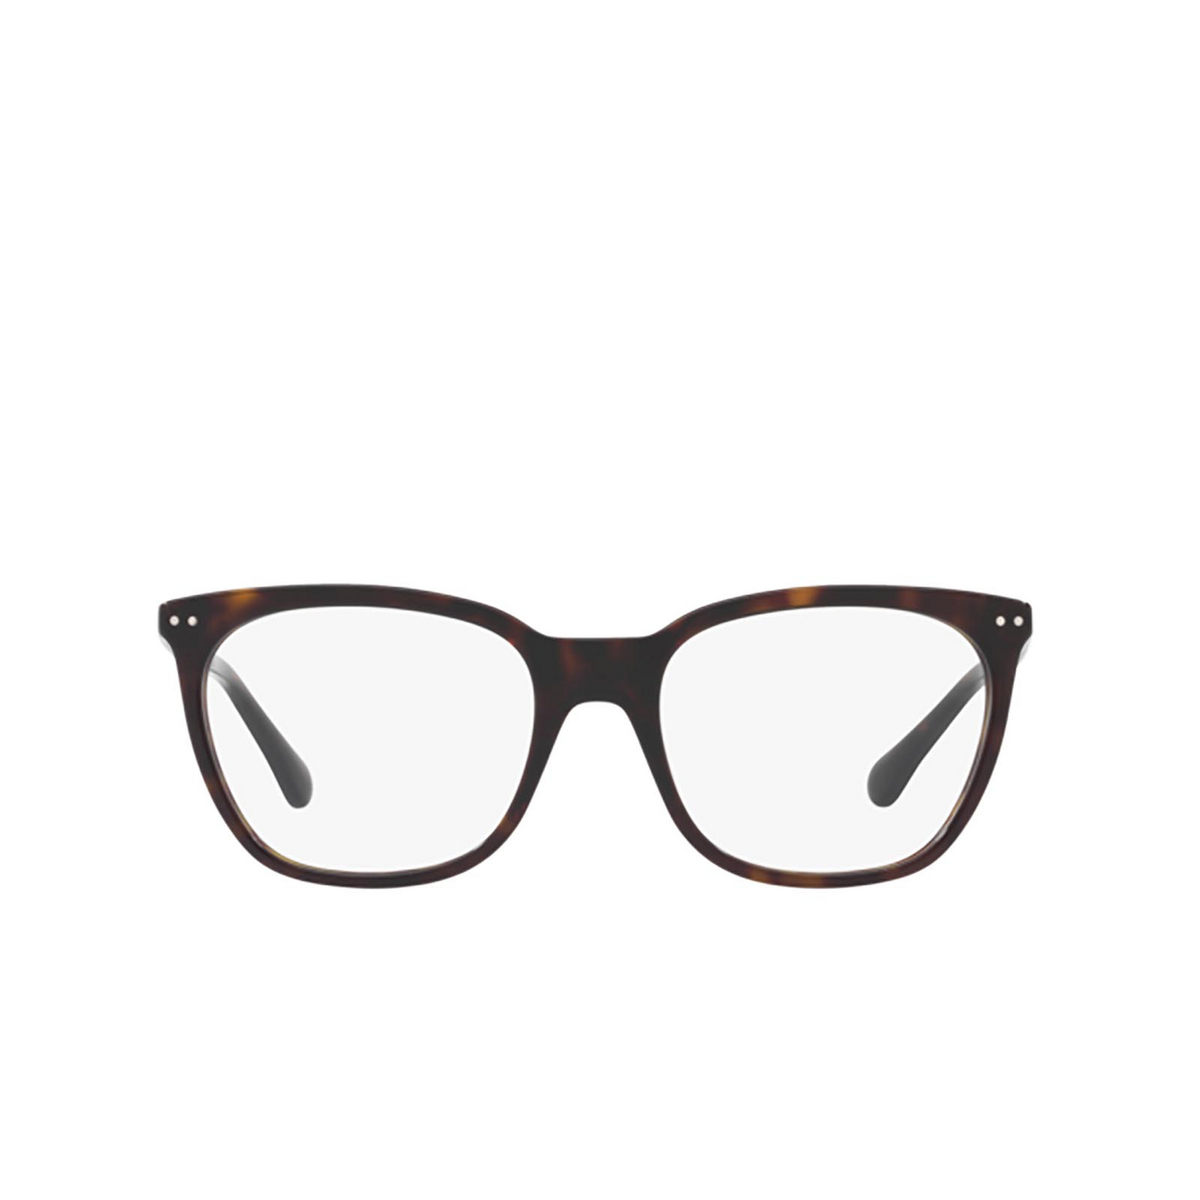 Polo Ralph Lauren® Square Eyeglasses: PH2170 color 5003 - front view.